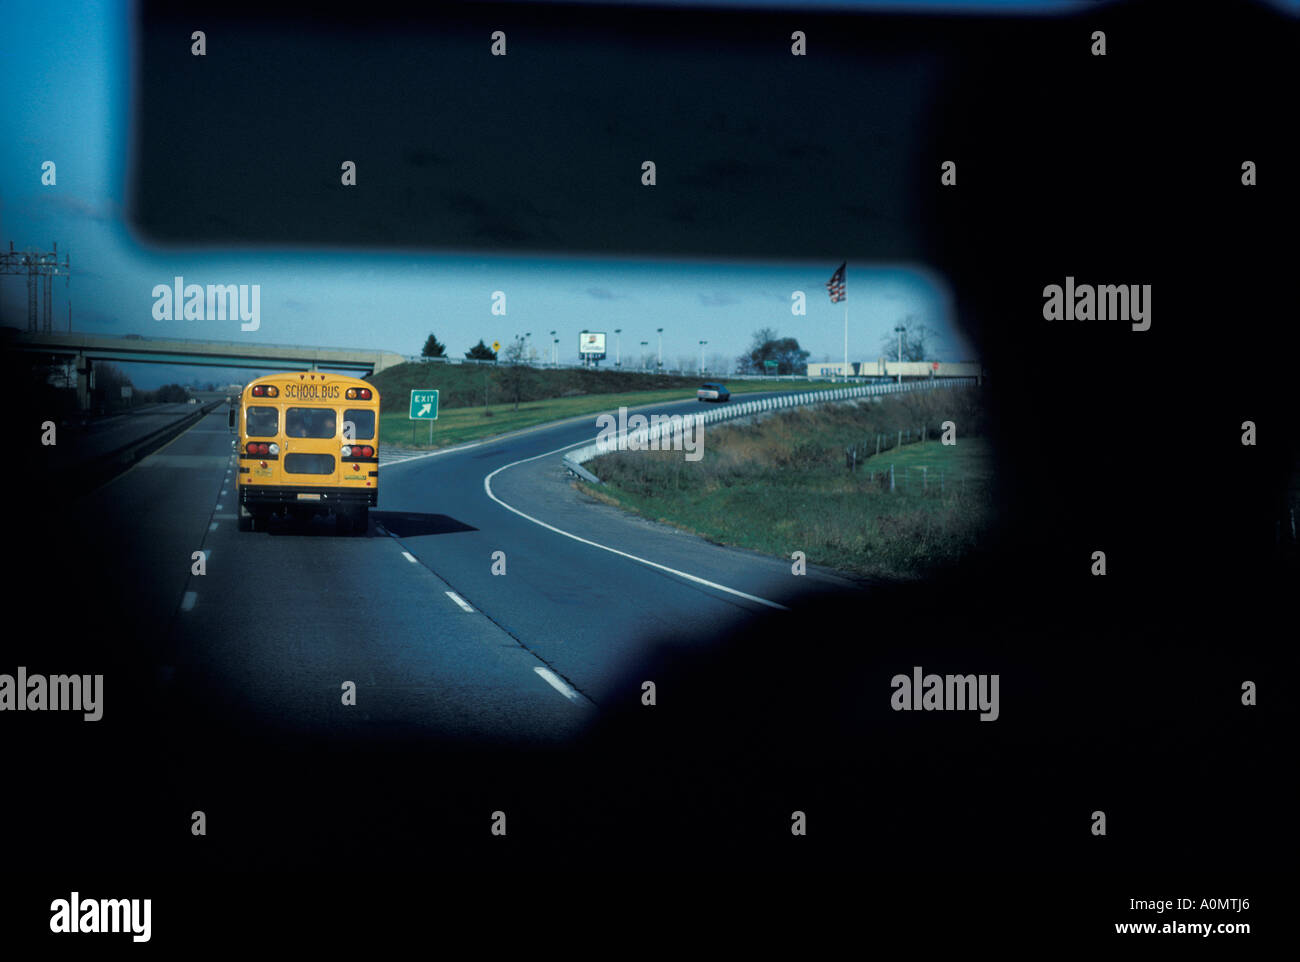 yellow school bus driver view transport transportation highway interchange exit ramp Stock Photo